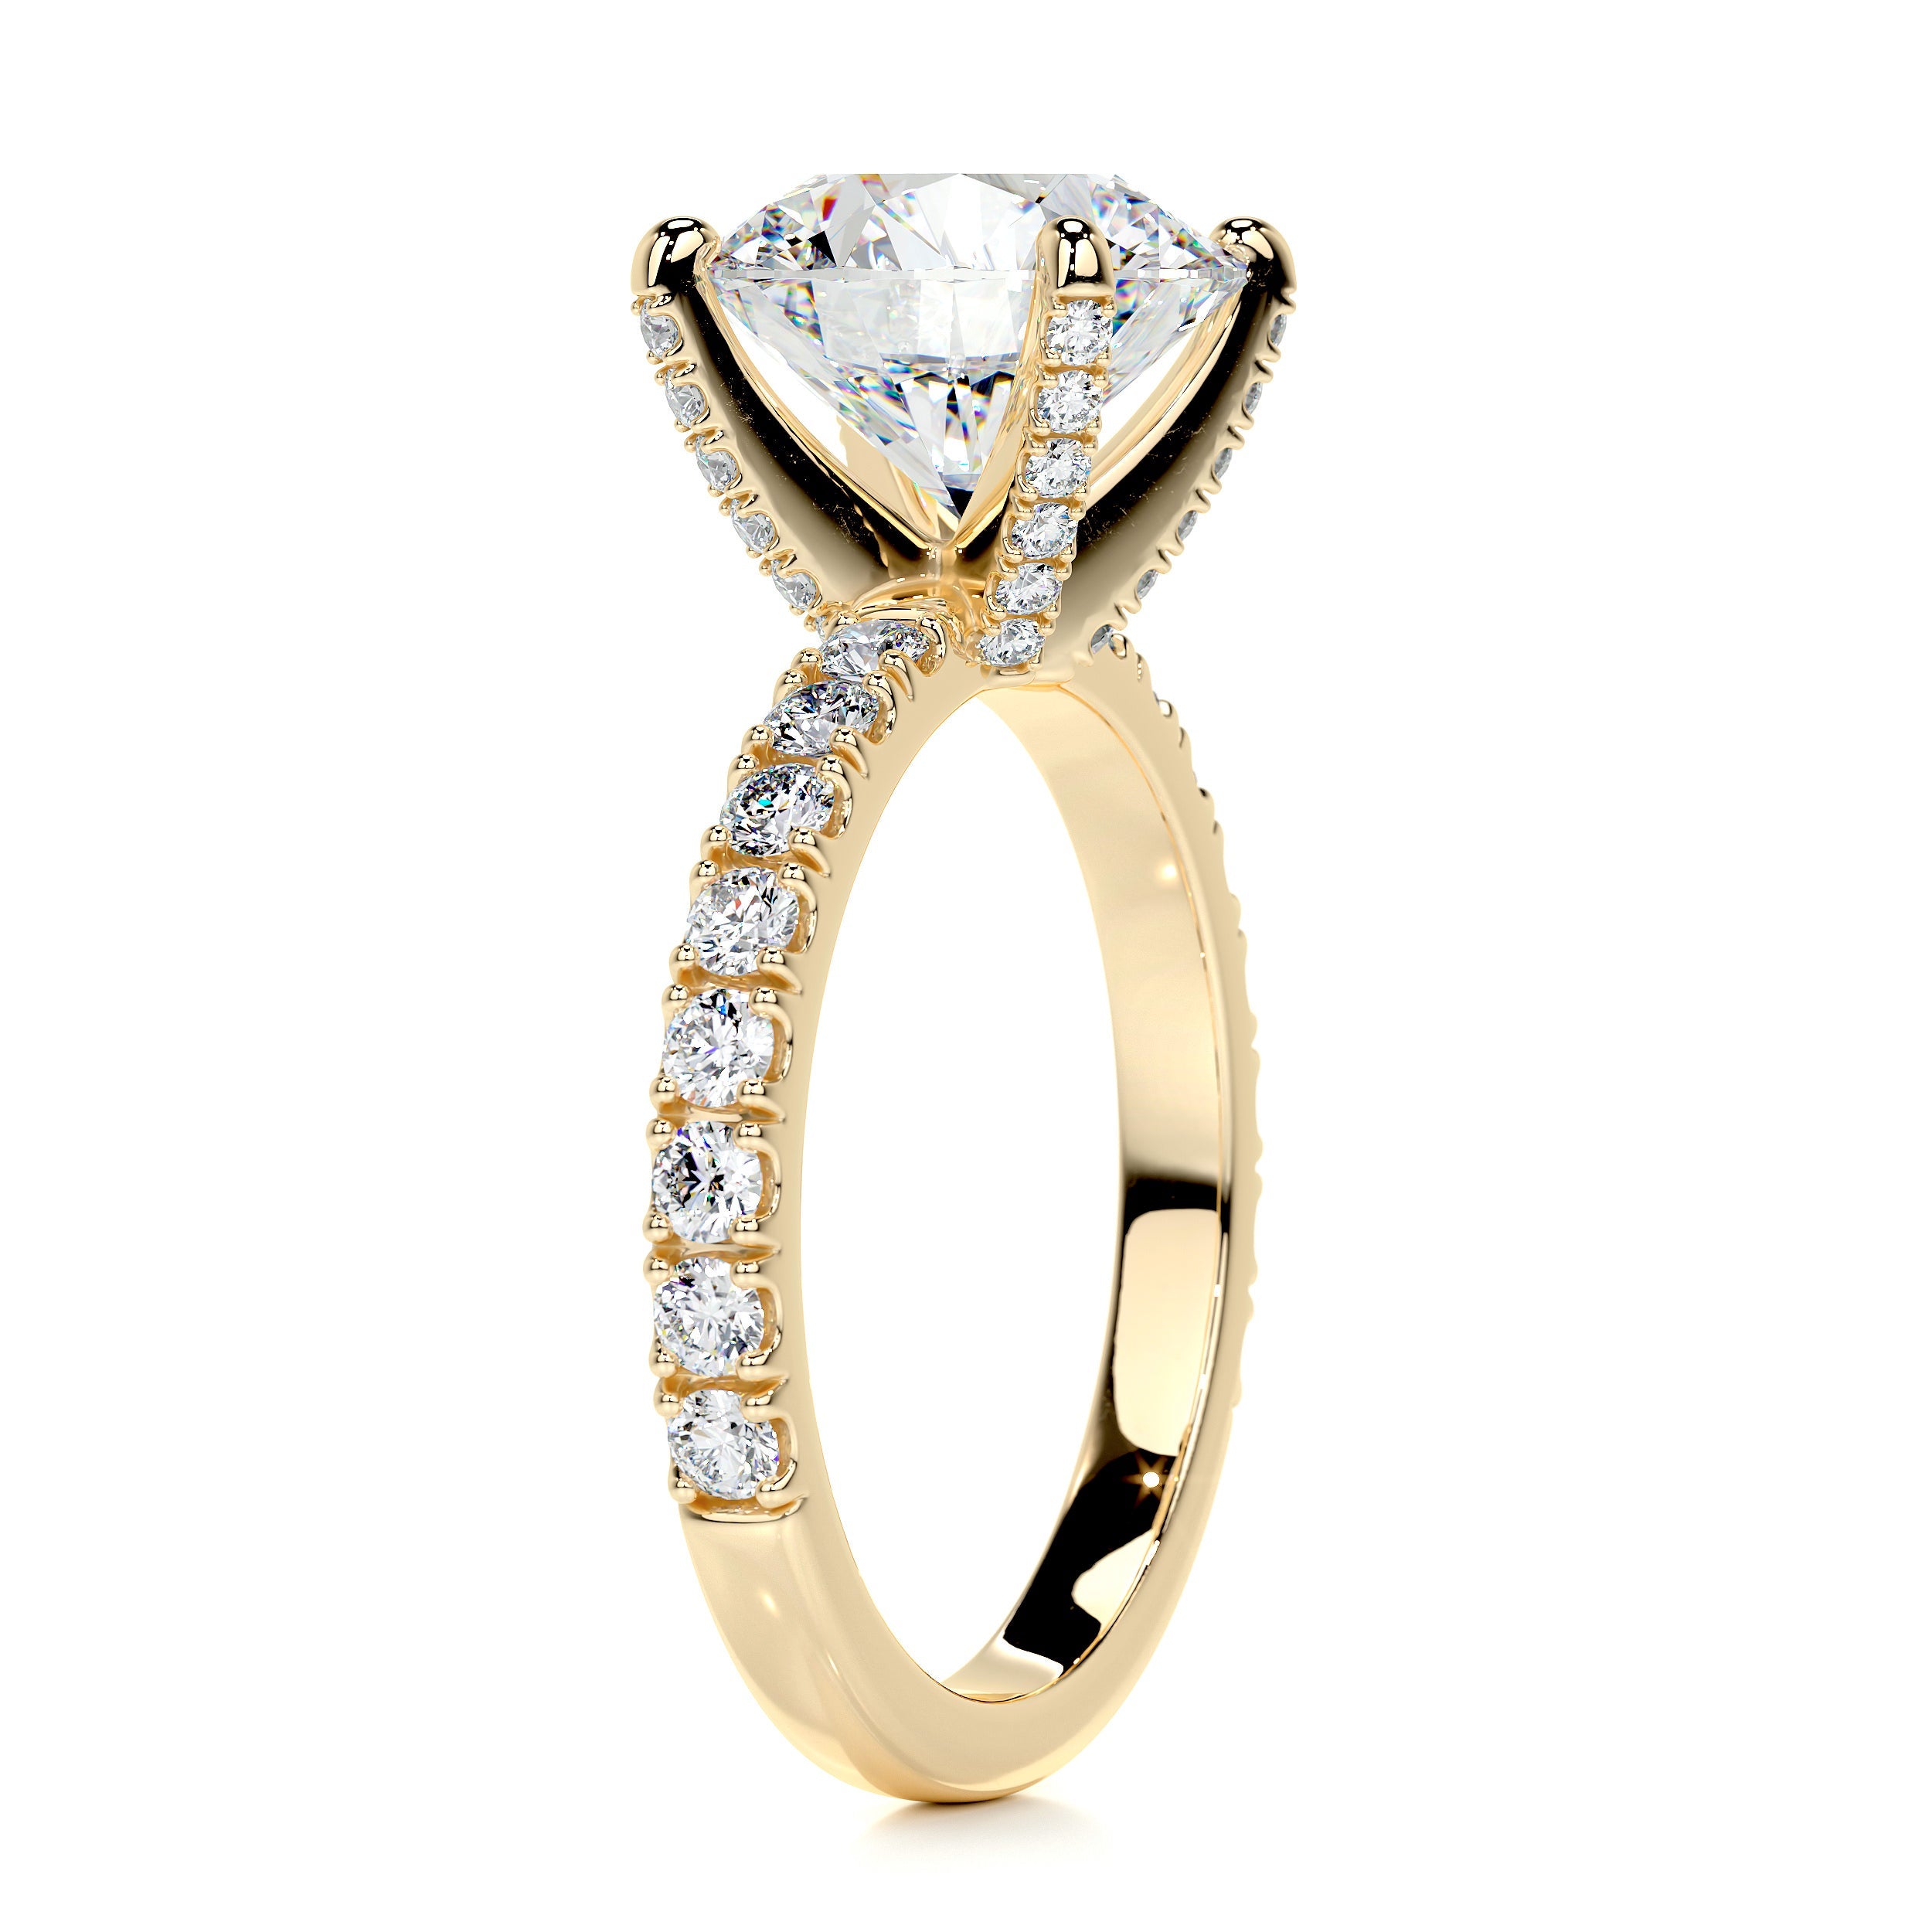 Alison Moissanite & Diamonds Ring   (3.75 Carat) -18K Yellow Gold (RTS)